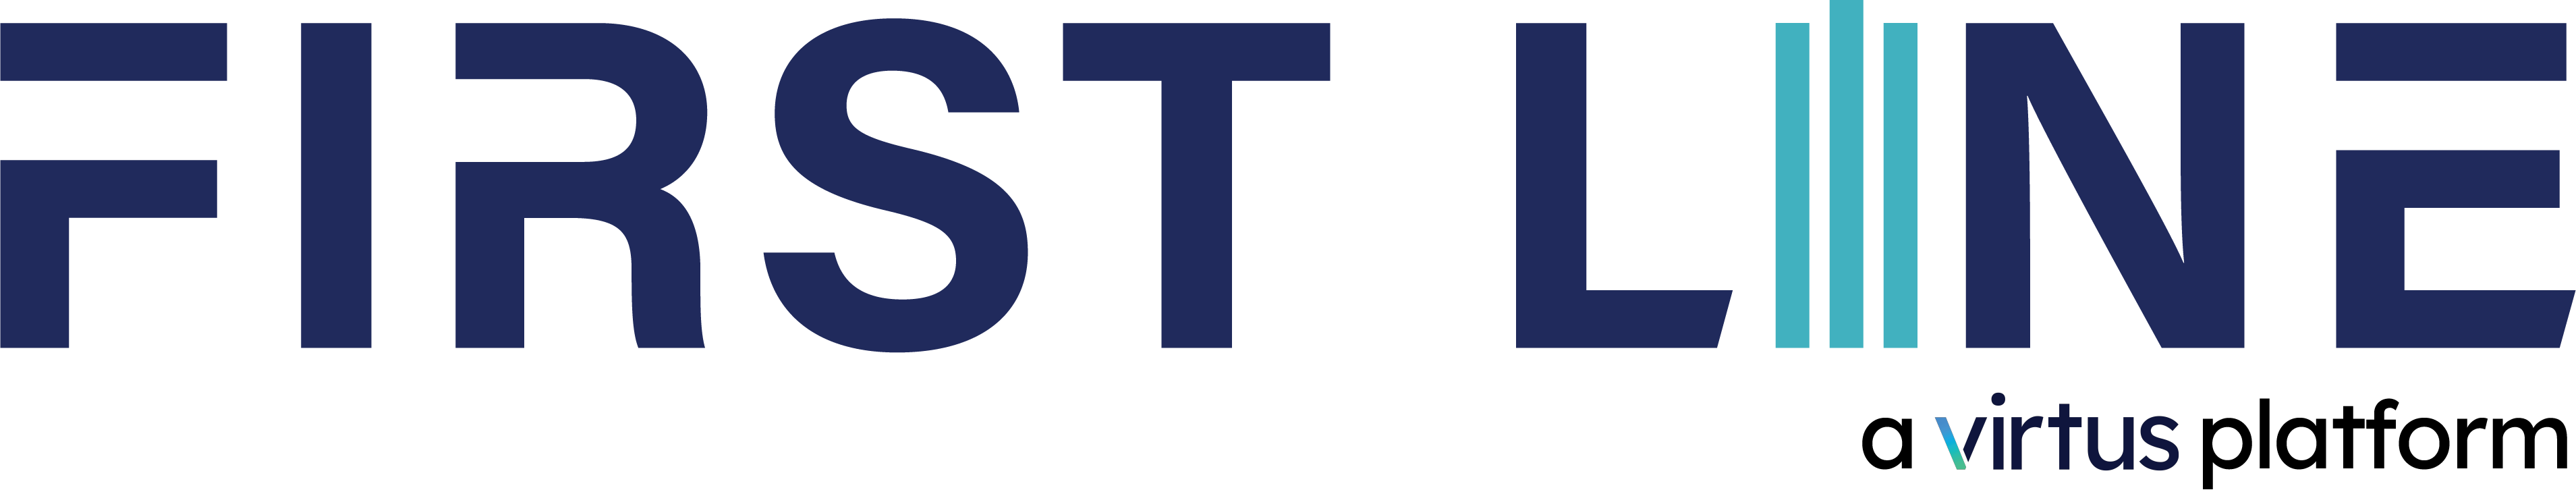 First Line logo (a virtus platform)